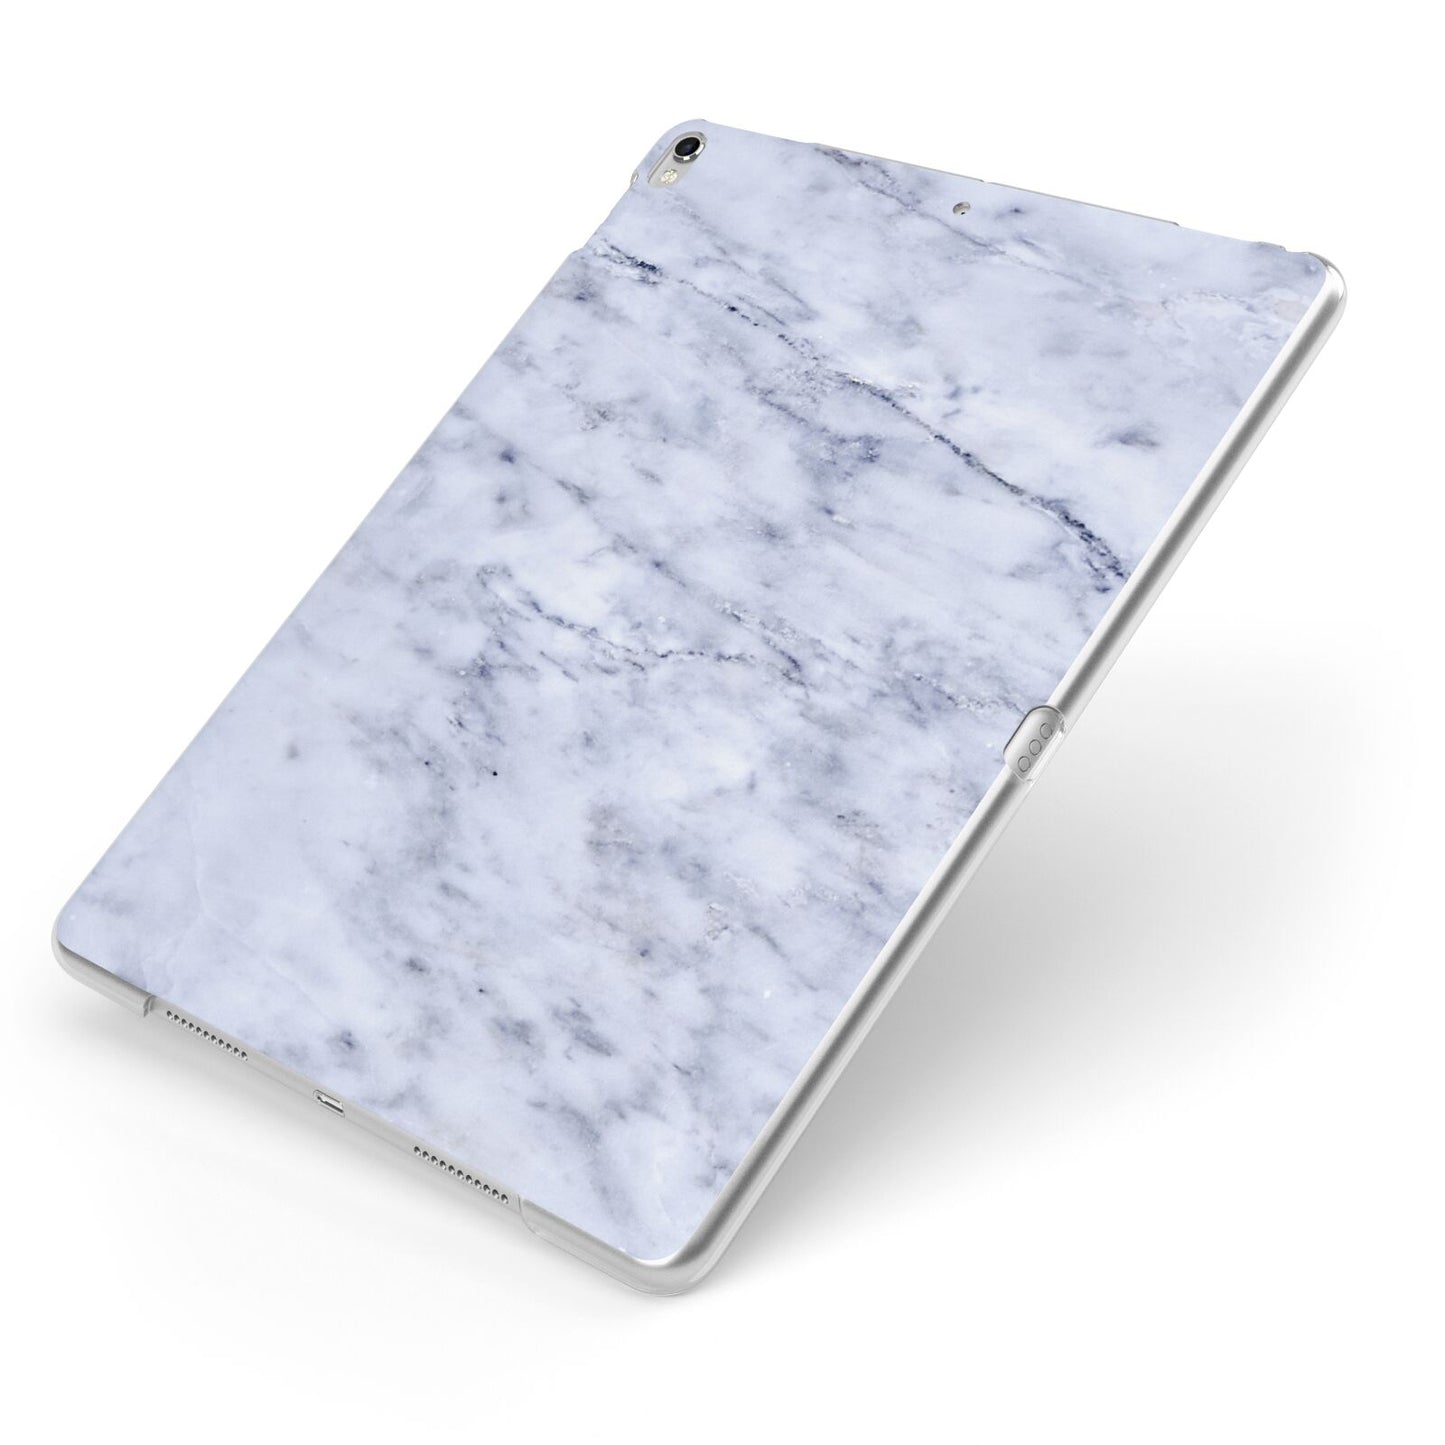 Faux Carrara Marble Print Apple iPad Case on Silver iPad Side View